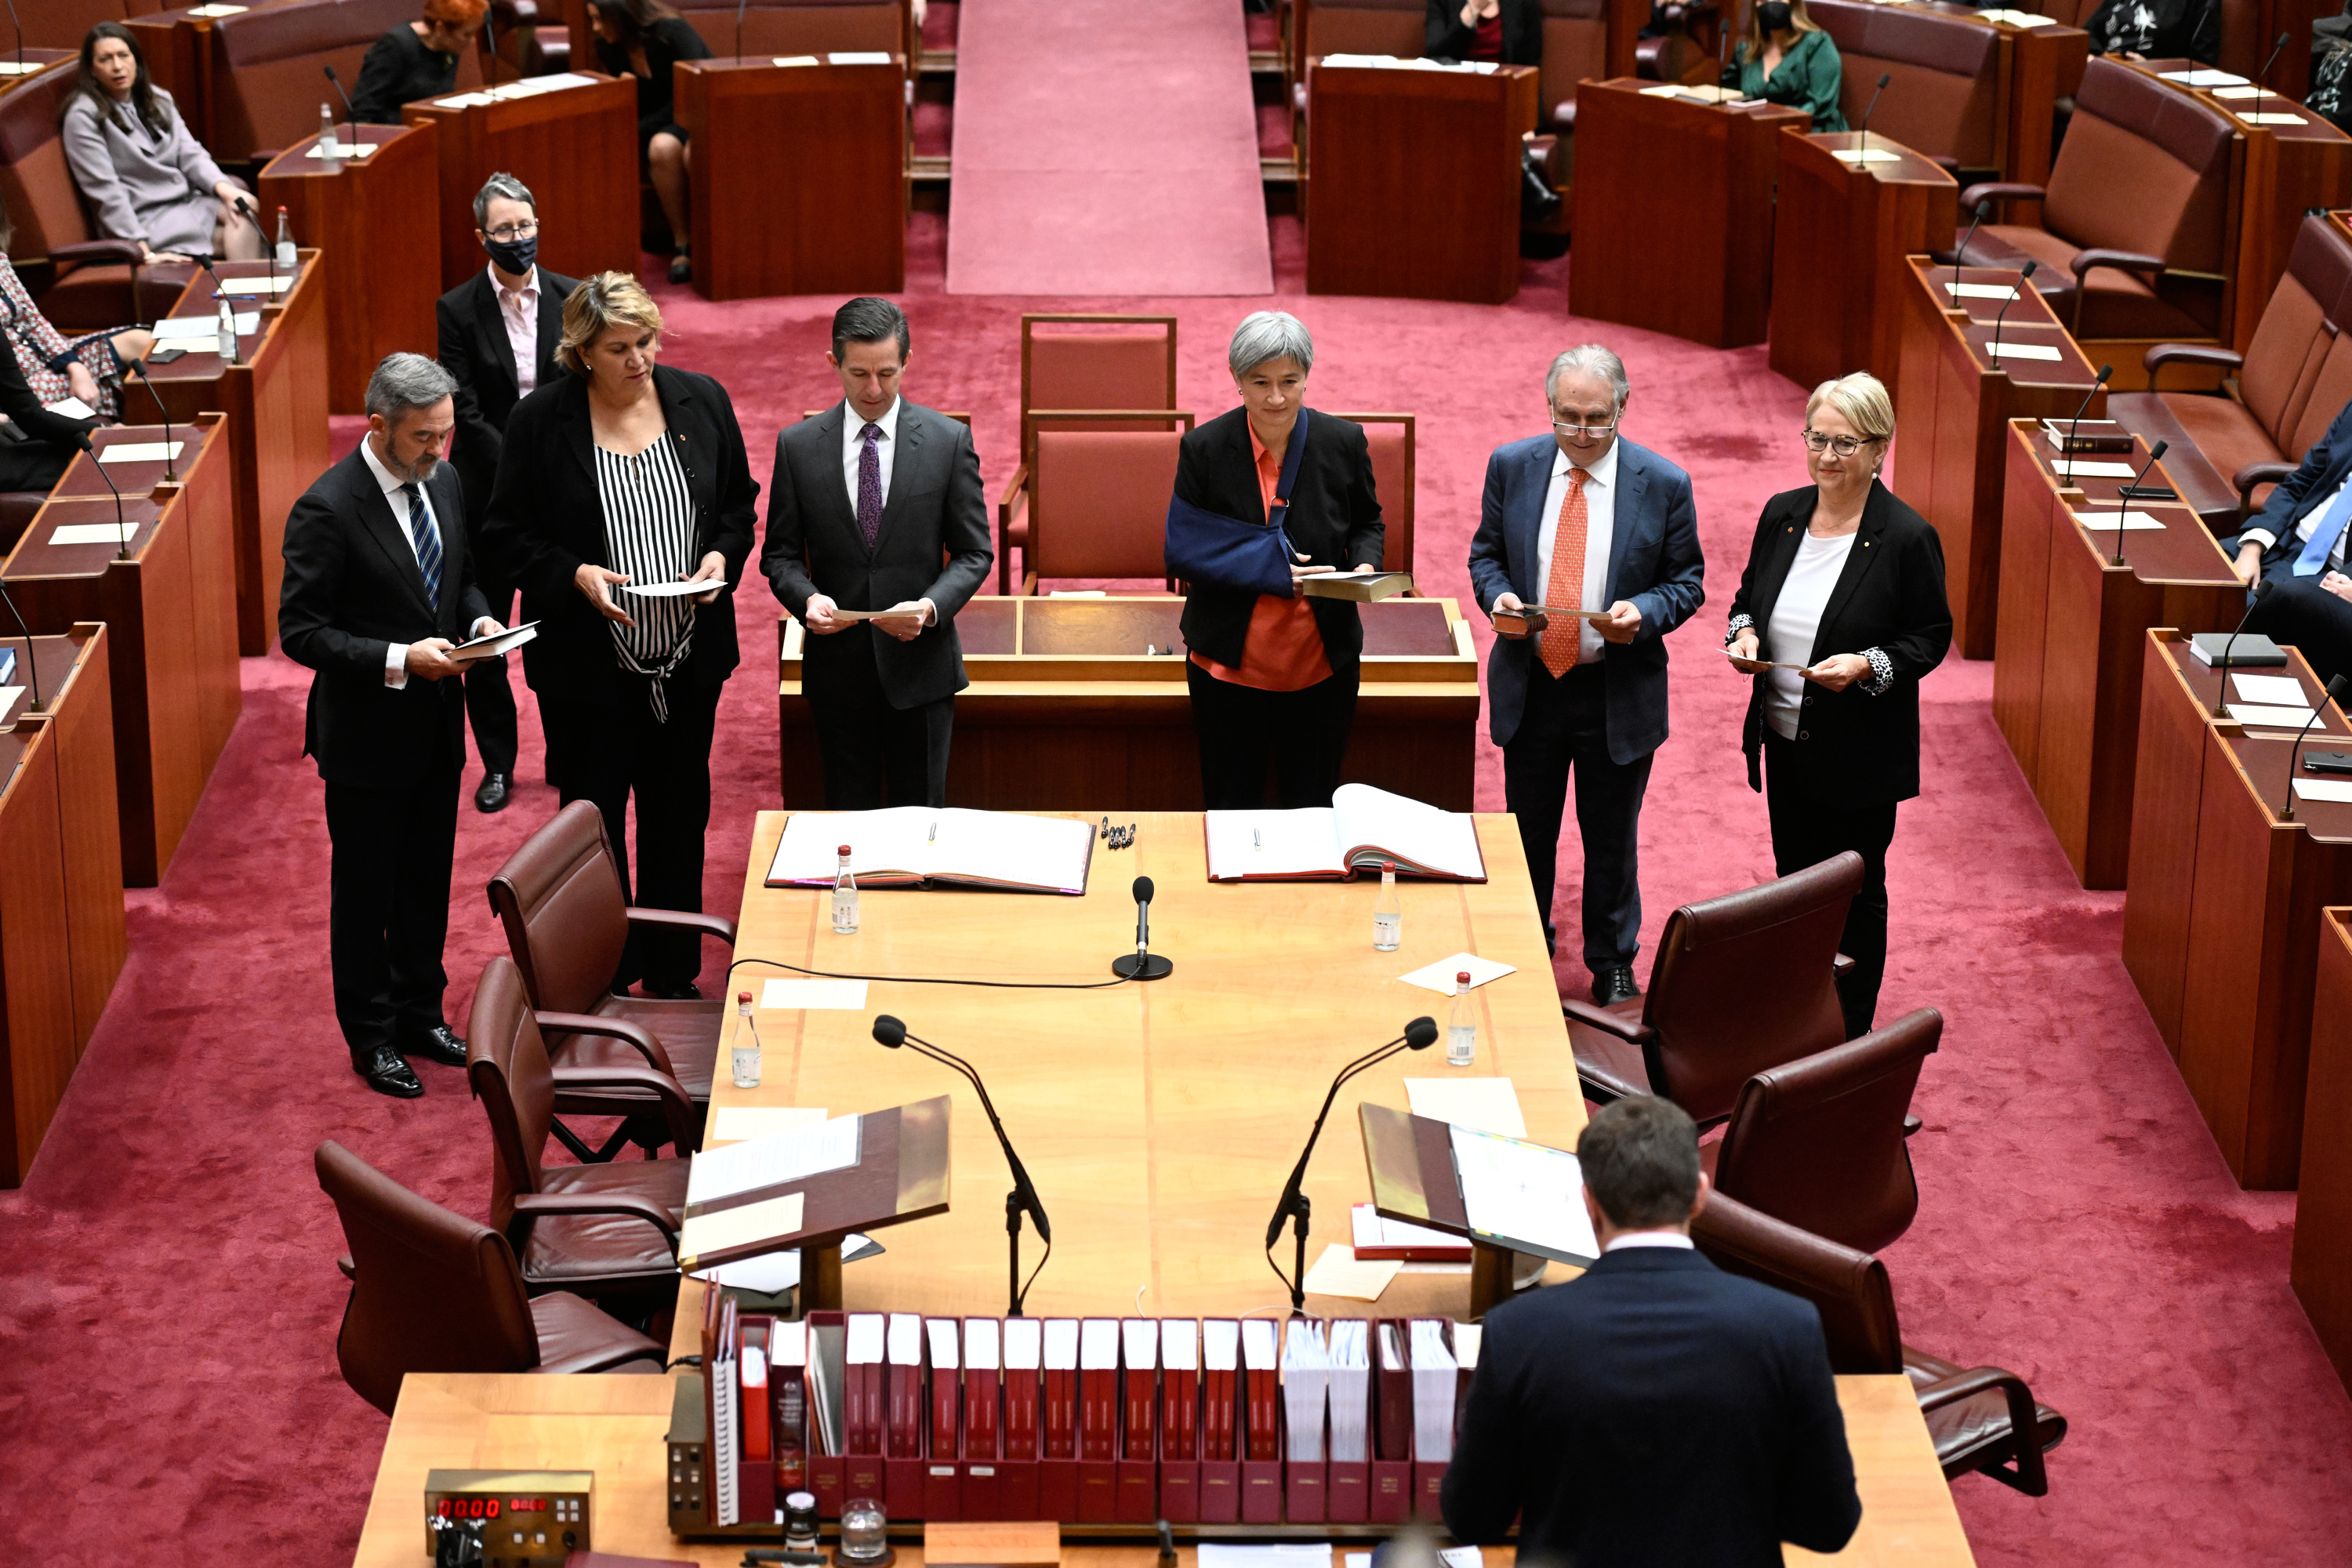 Six senators standing making an oath or affirmation in the Senate chamber